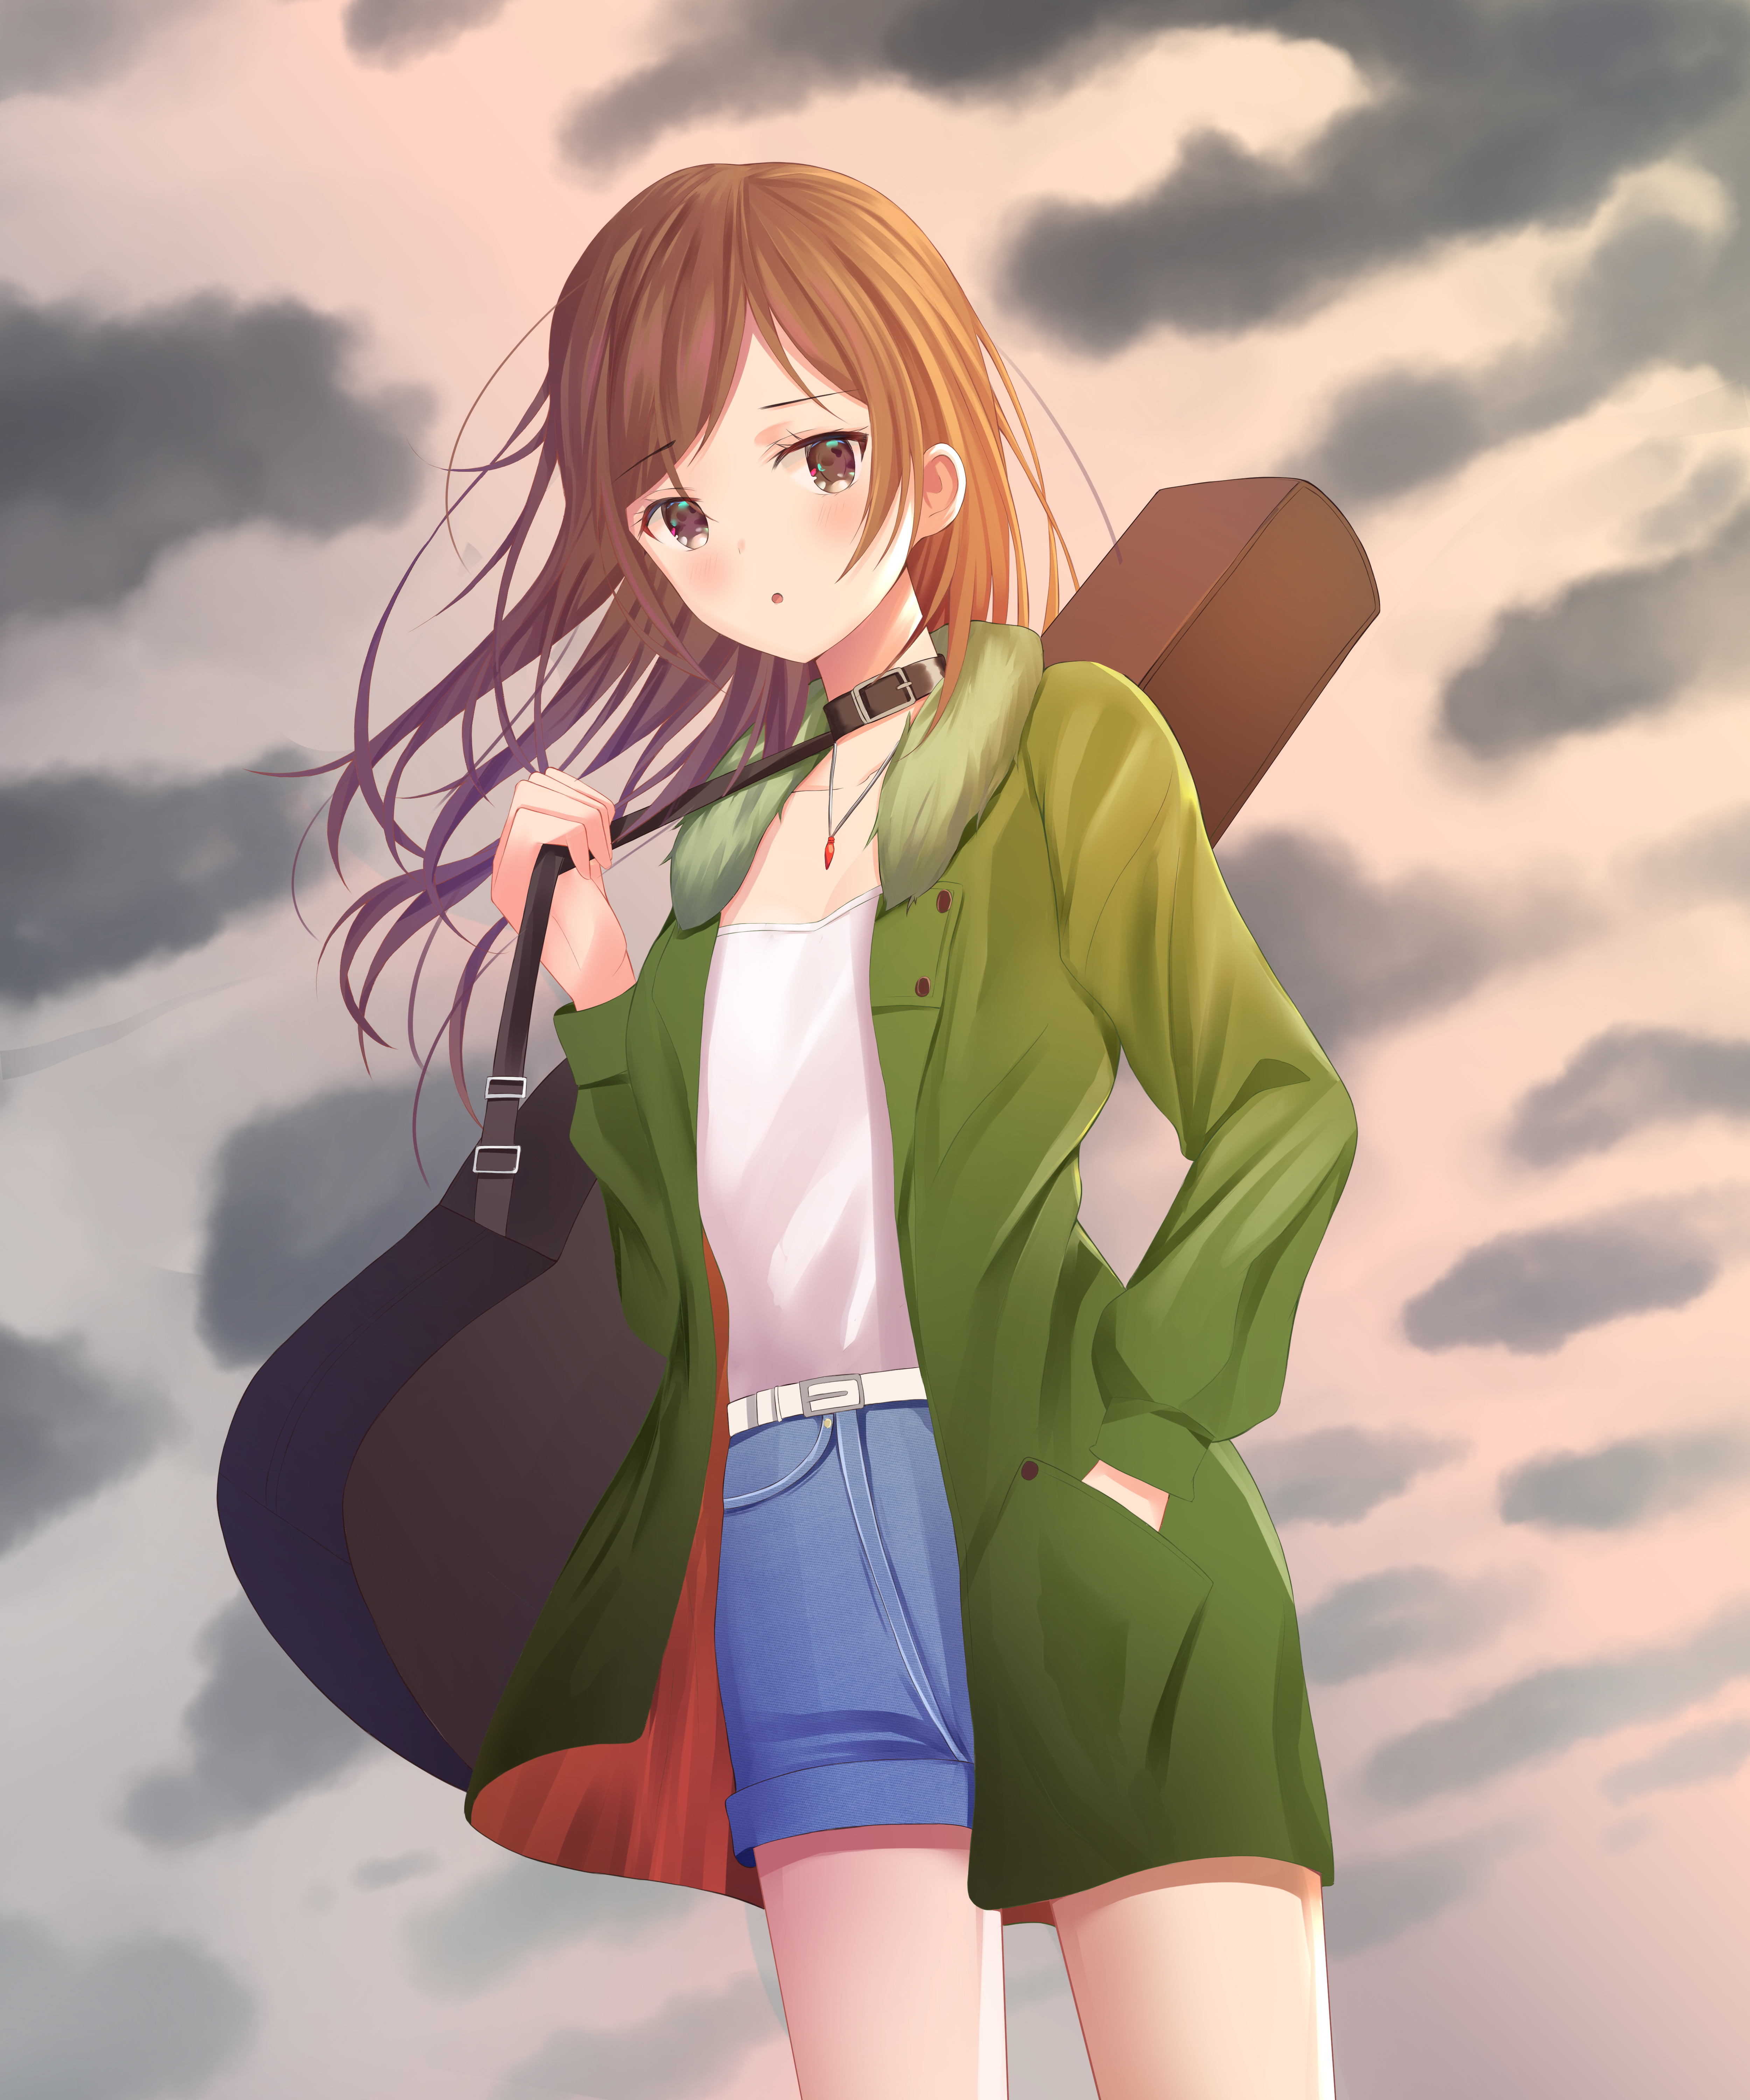 girl, anime, clouds, guitar, case, sheath